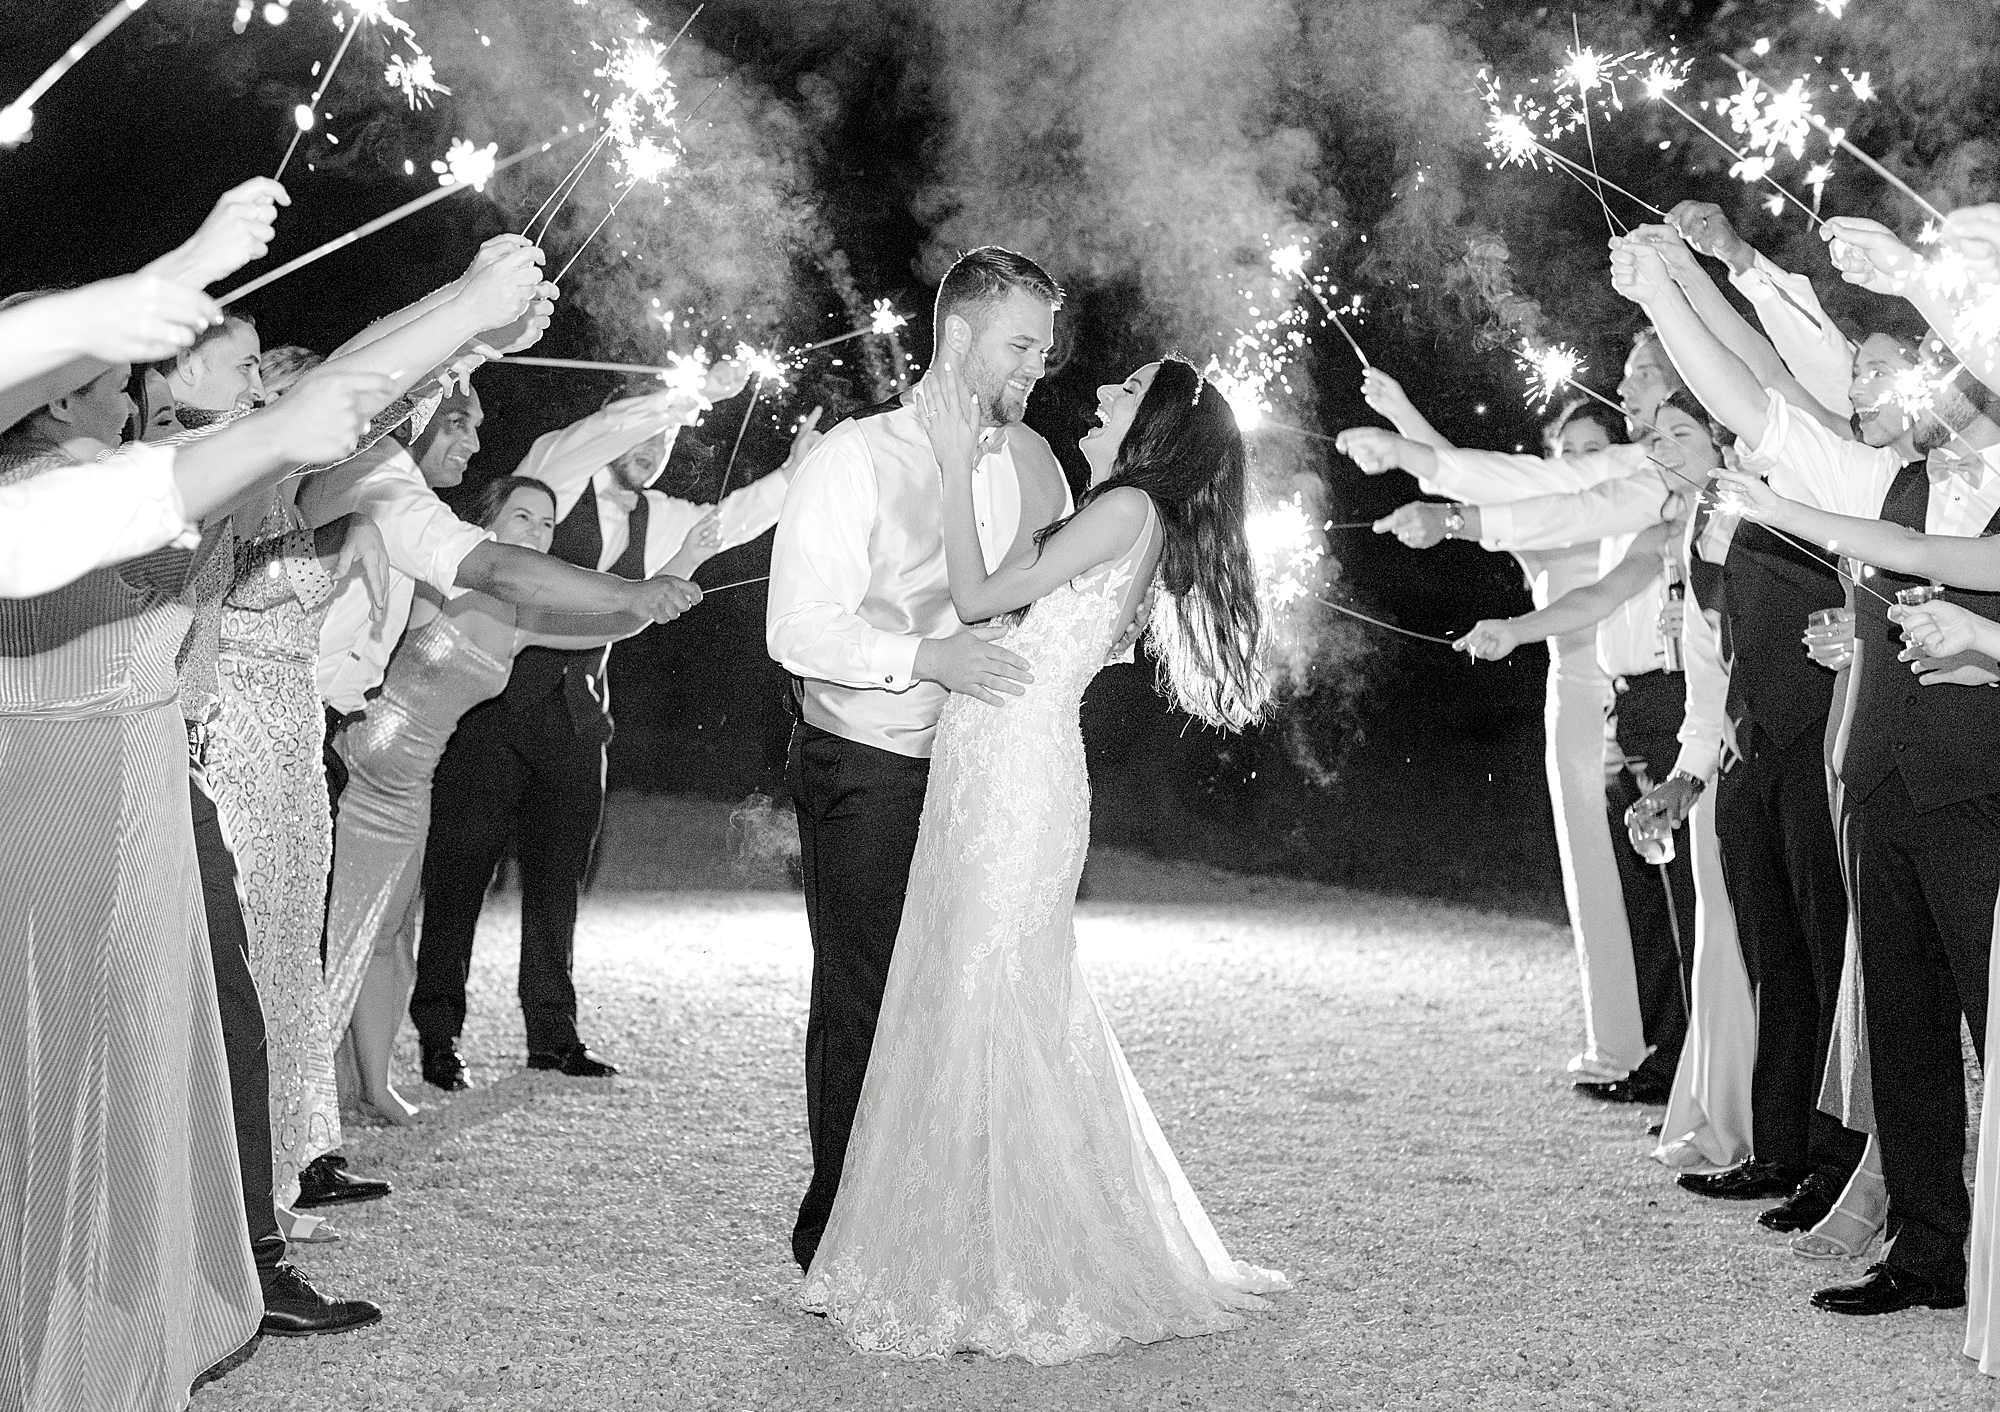 Bride and groom joyfully laughing under sparklers.